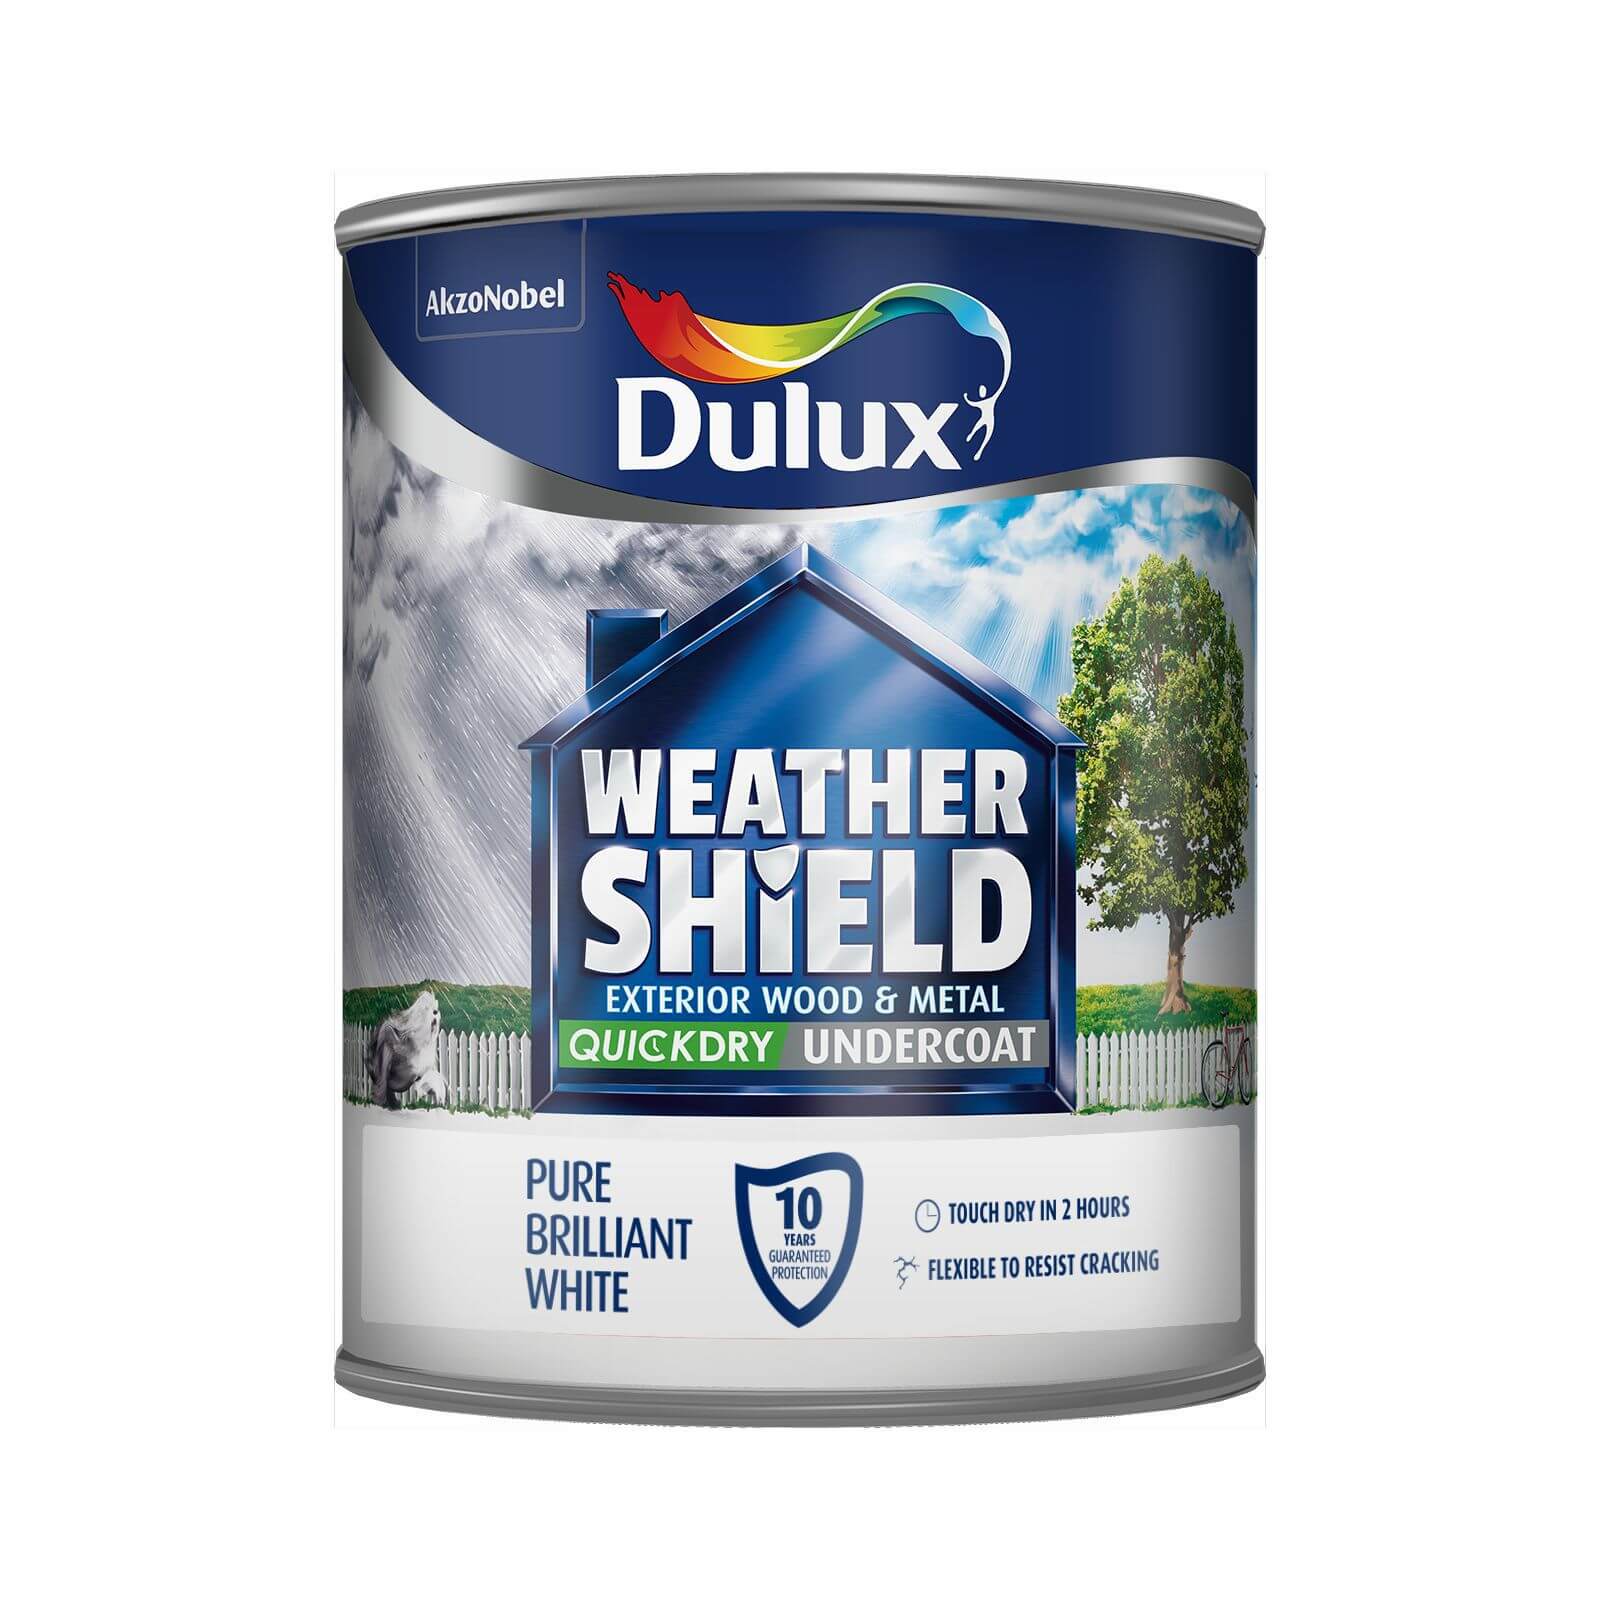 Dulux Weathershield Exterior Quick Dry Undercoat Pure Brilliant White - 2.5L